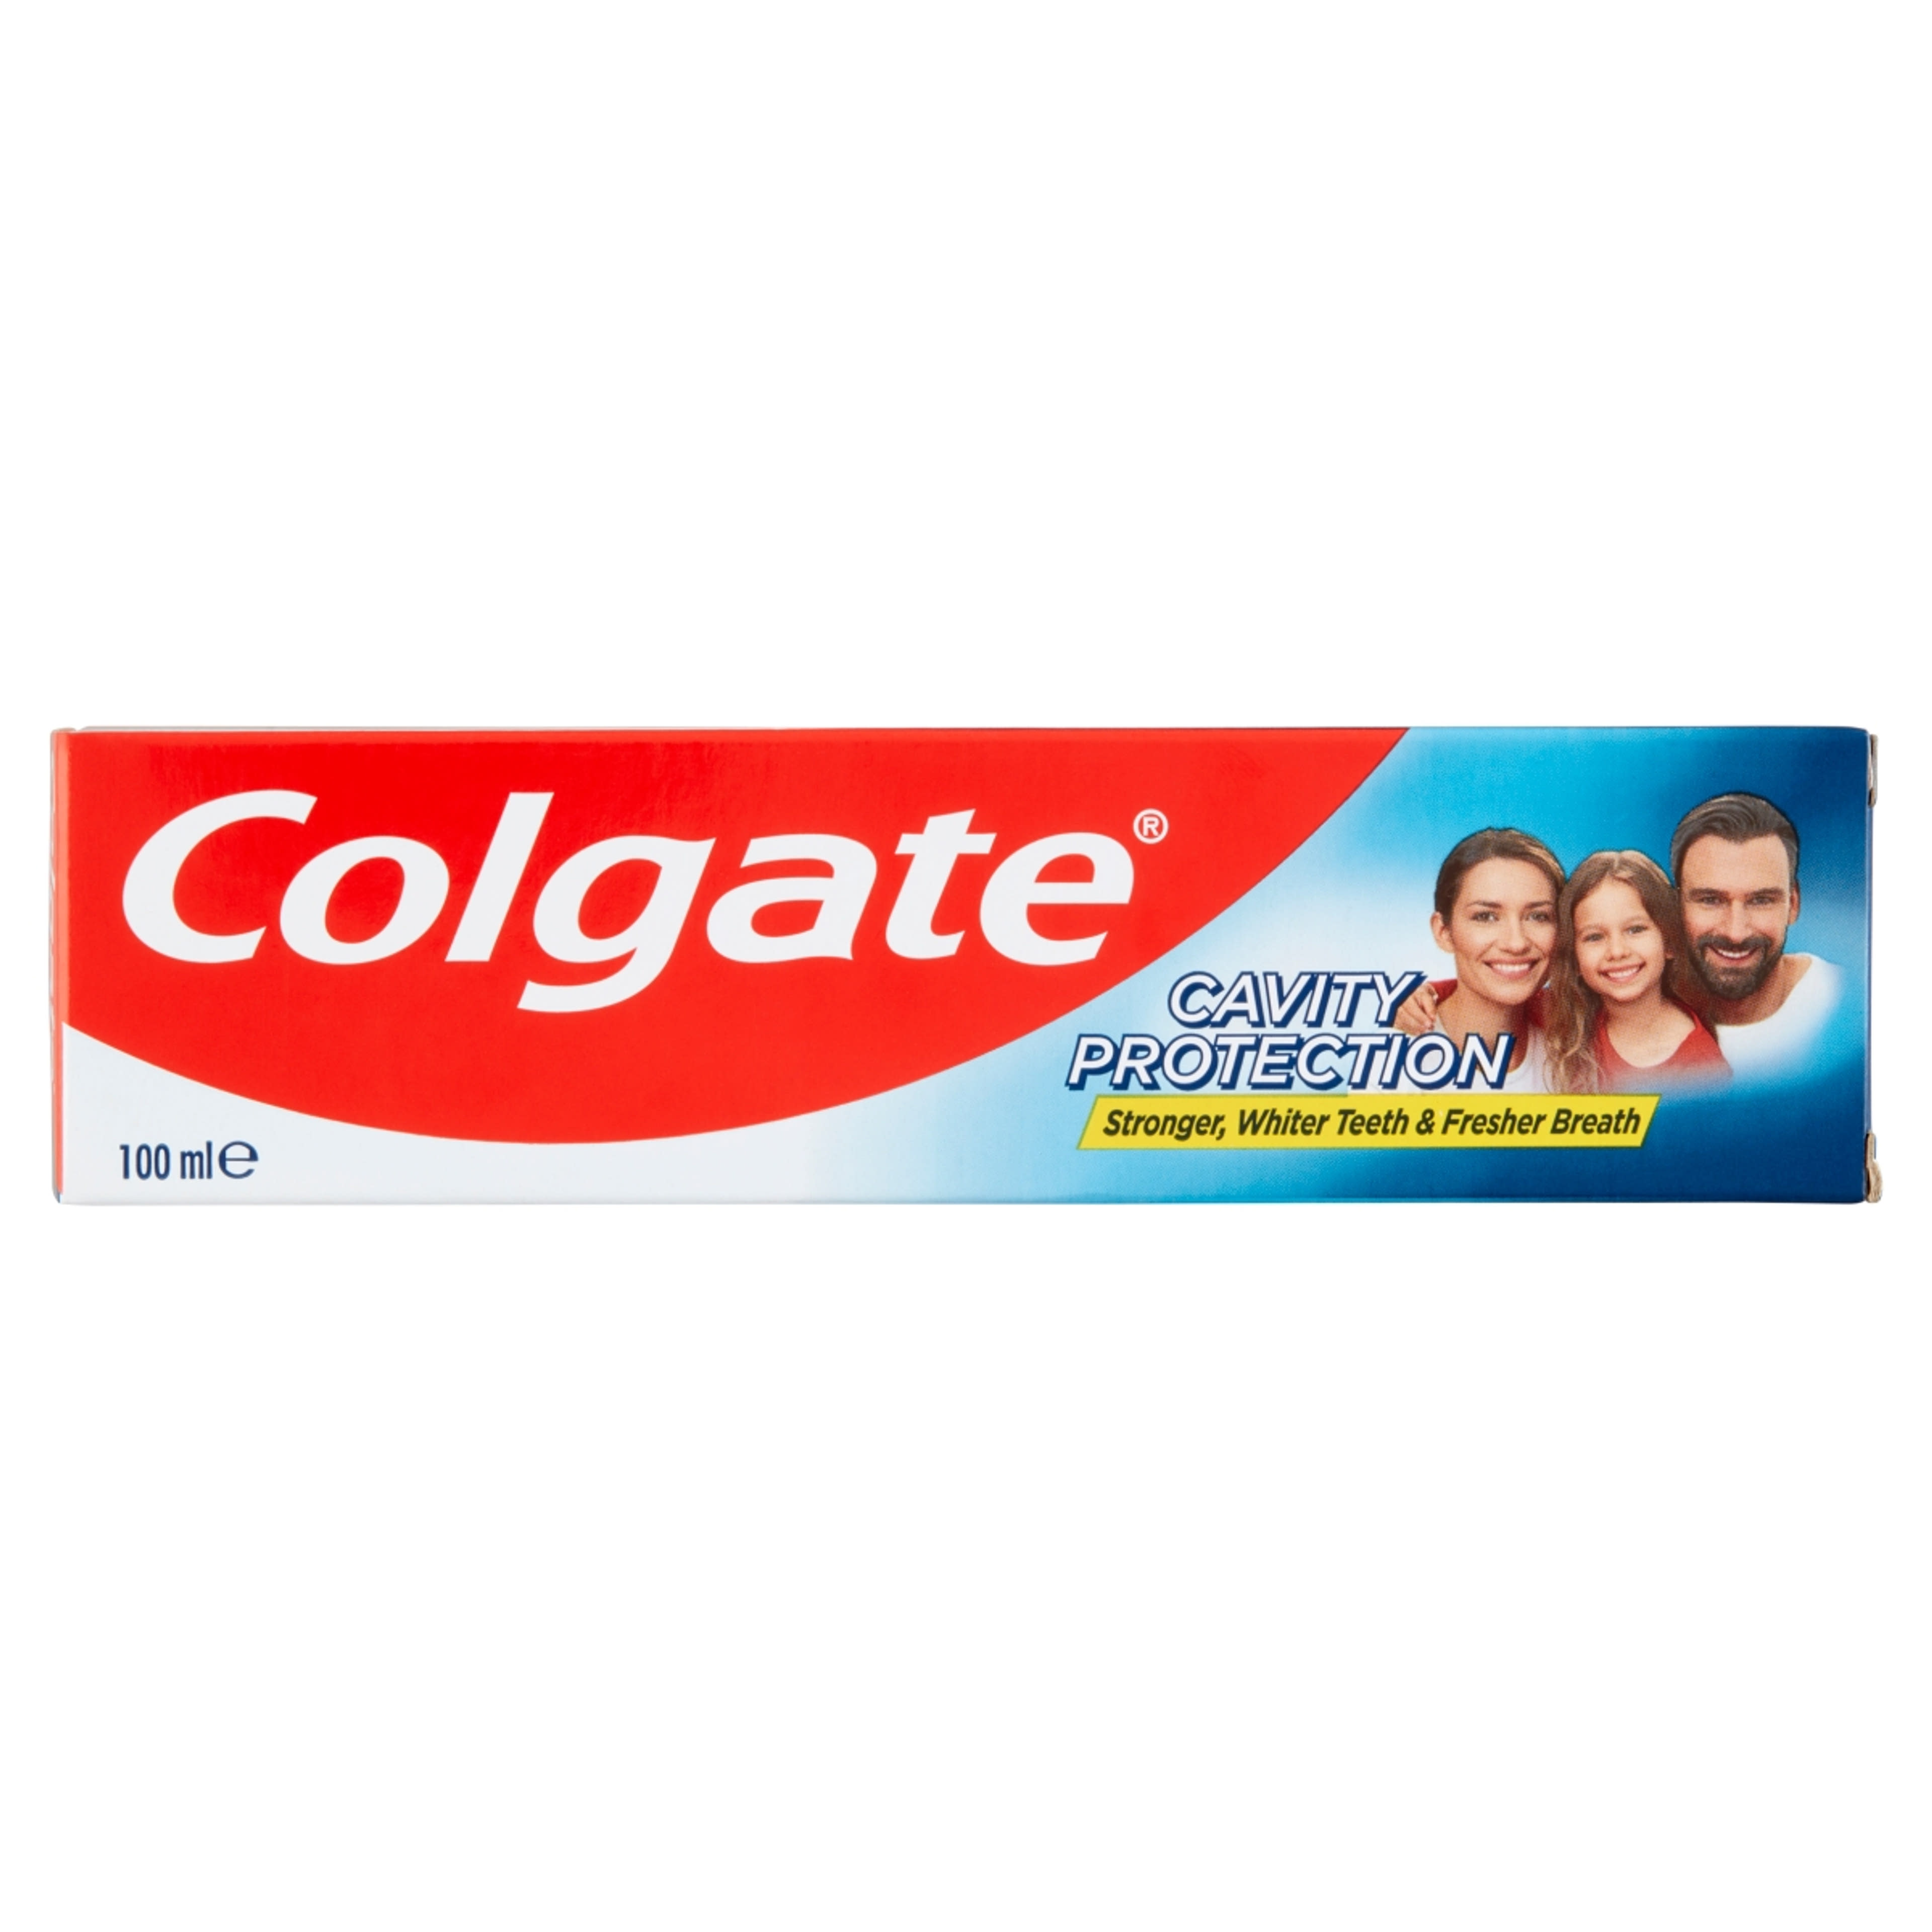 Colgate Cavity Protection fogkrém - 100 ml-1